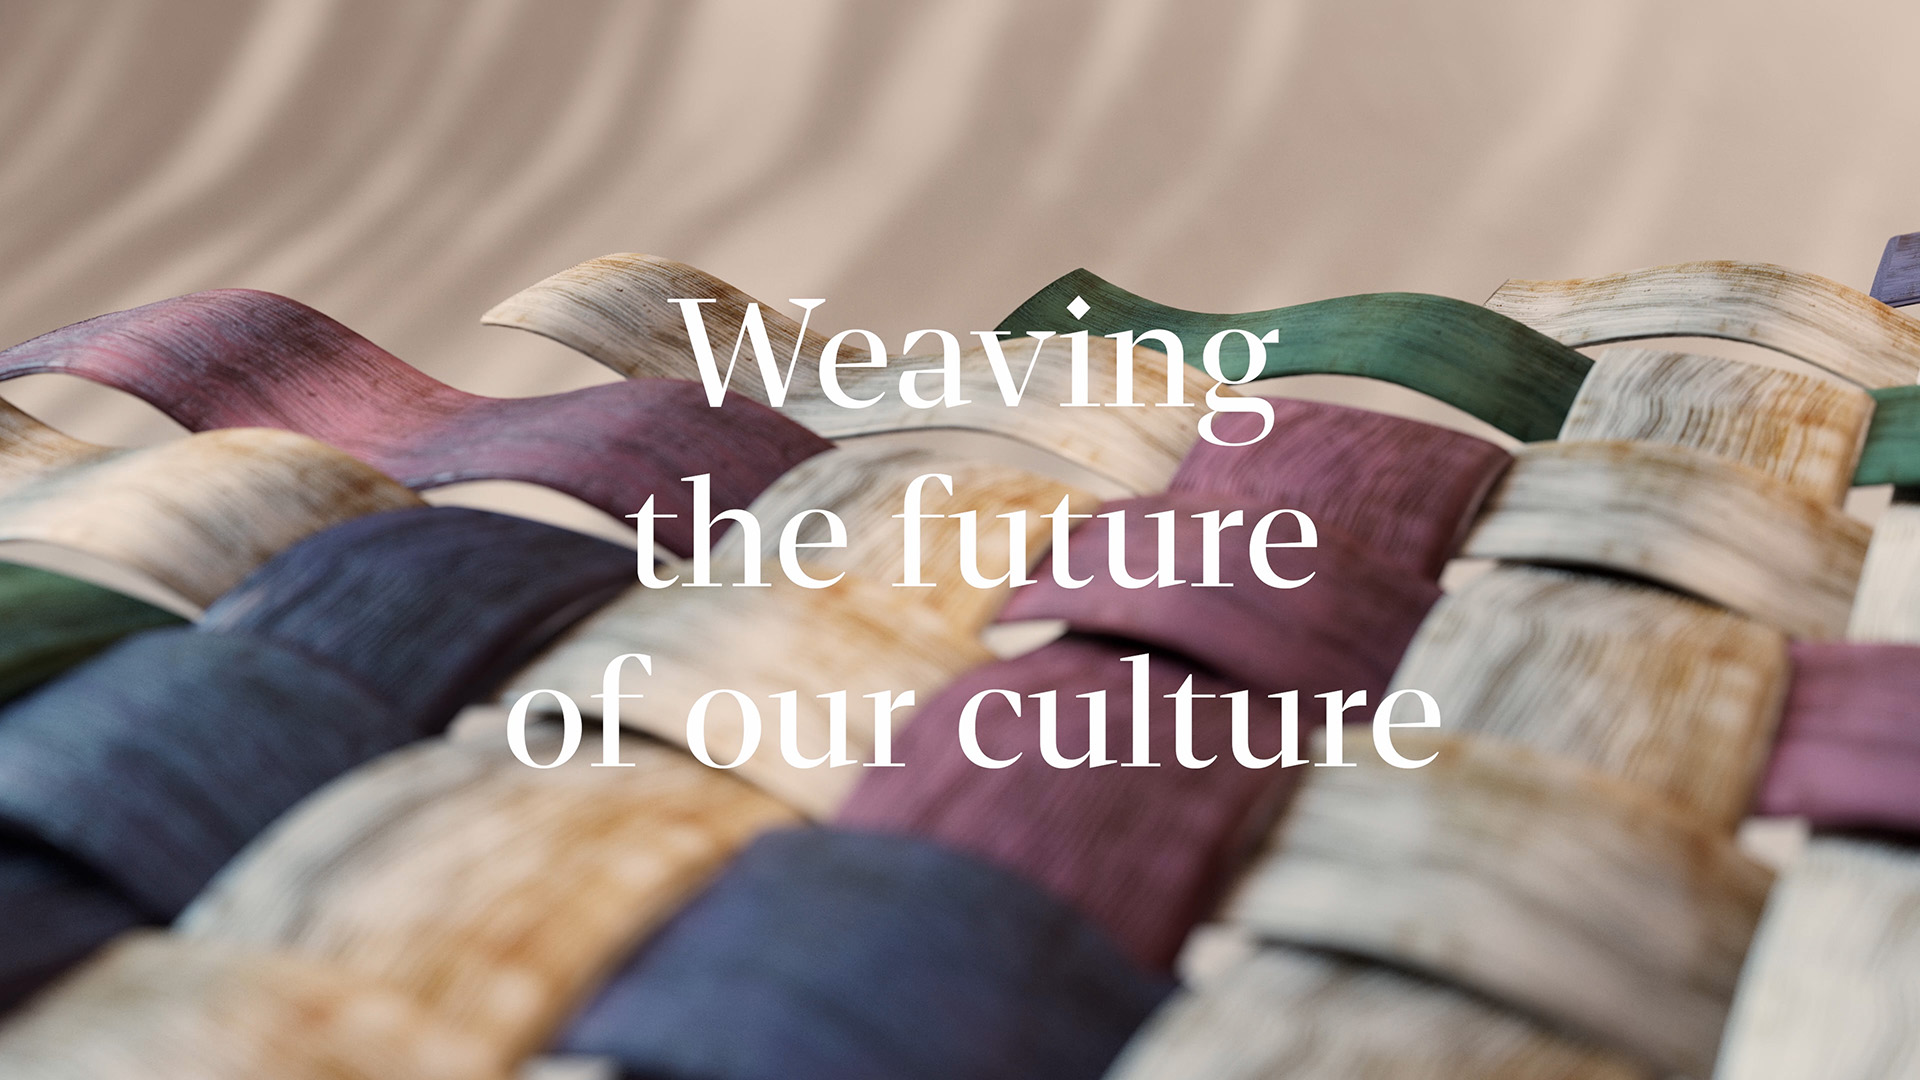 Saudi Arabia weaving culture in brand launch video